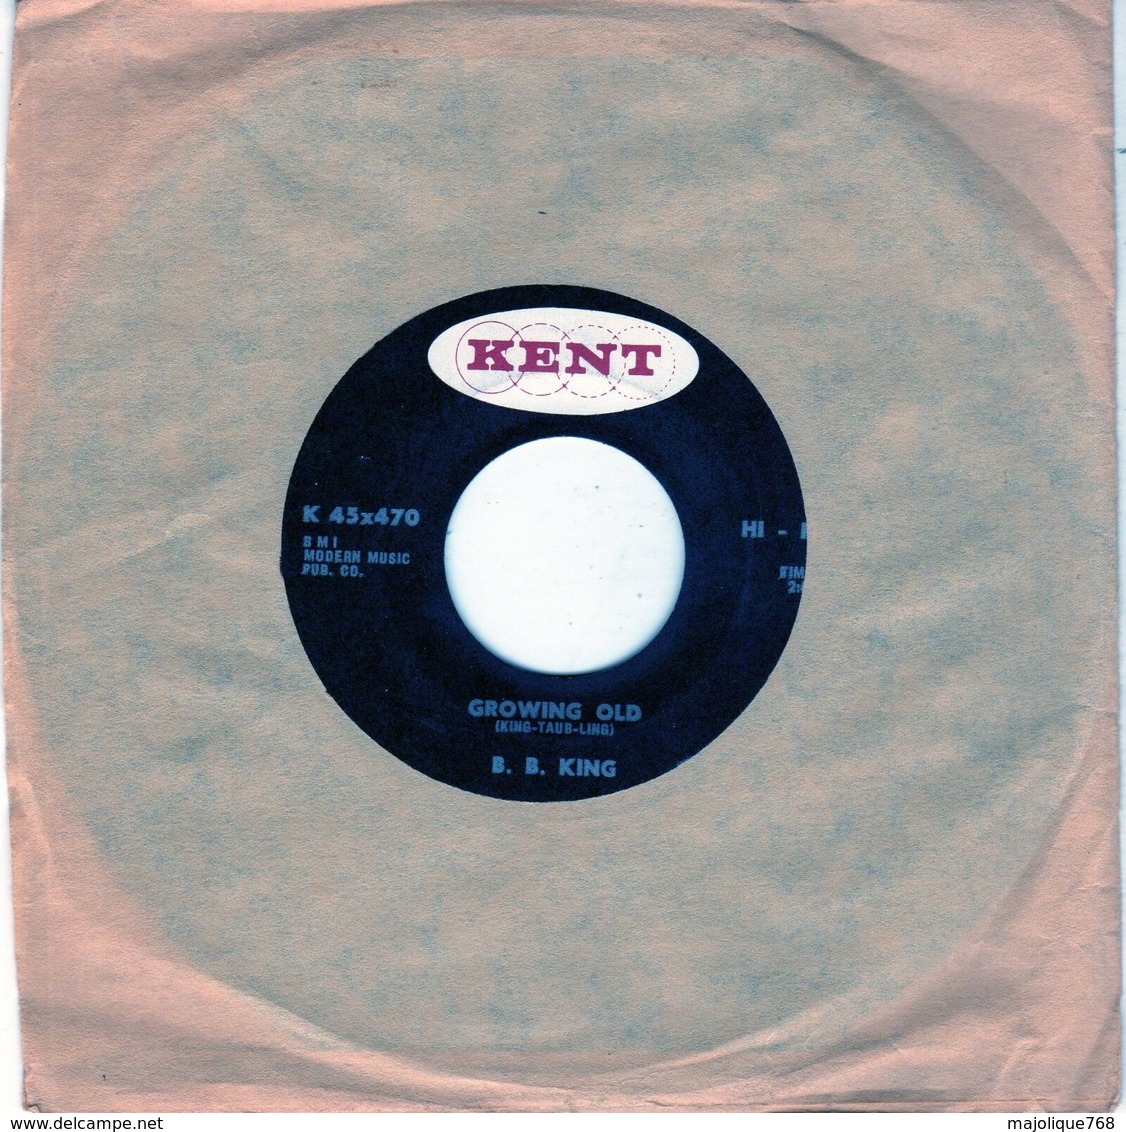 Disque De B. B. King - Bad Breaks  - Kent K 45 X 470 - 1967 - Blues